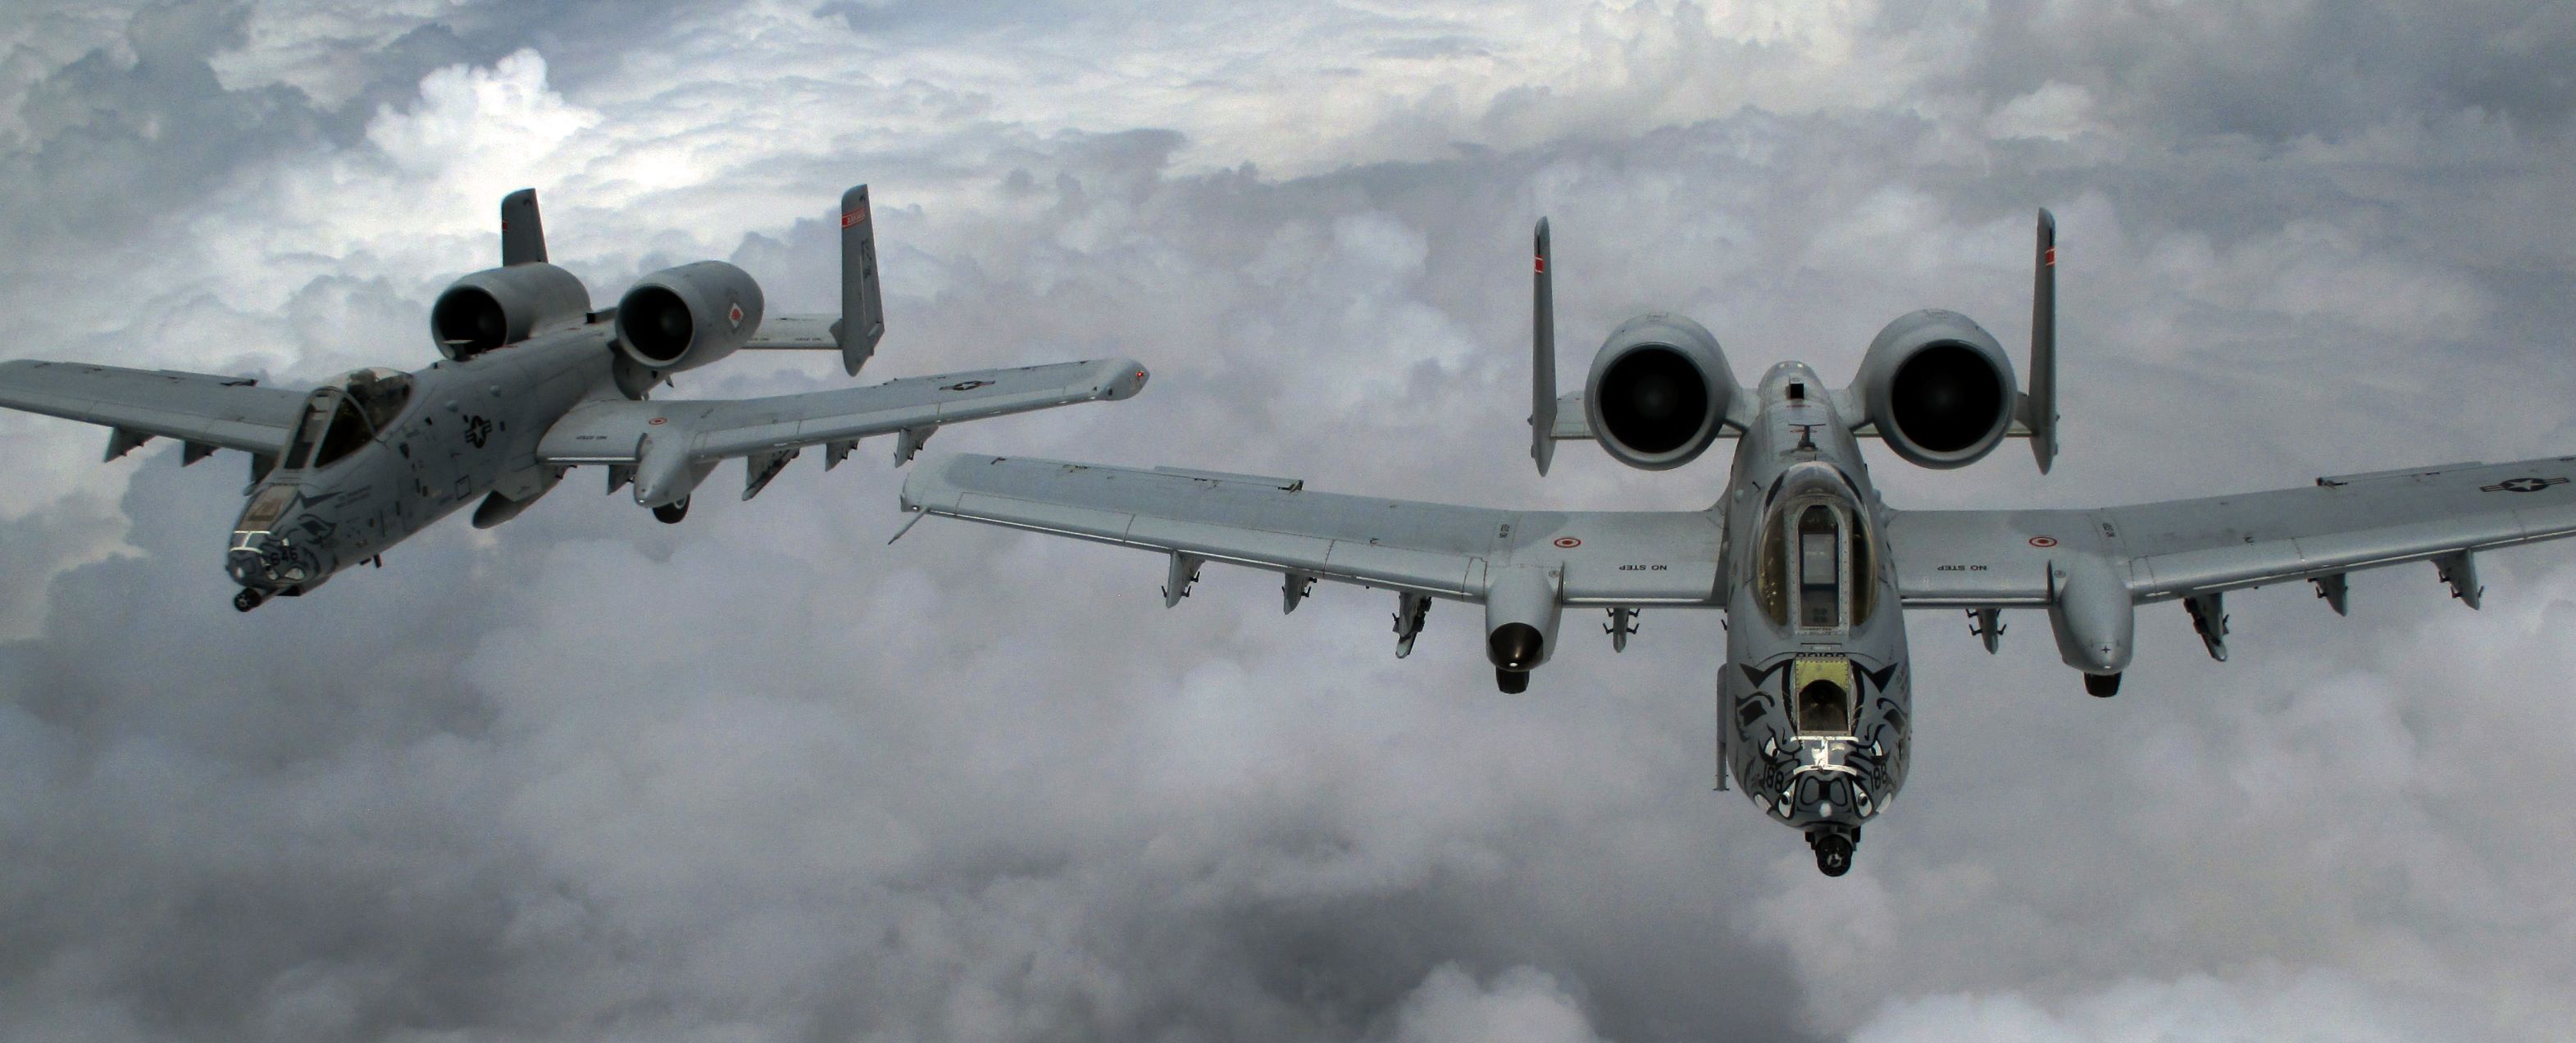 Ebbing A-10 “Warthog” bomber jets 